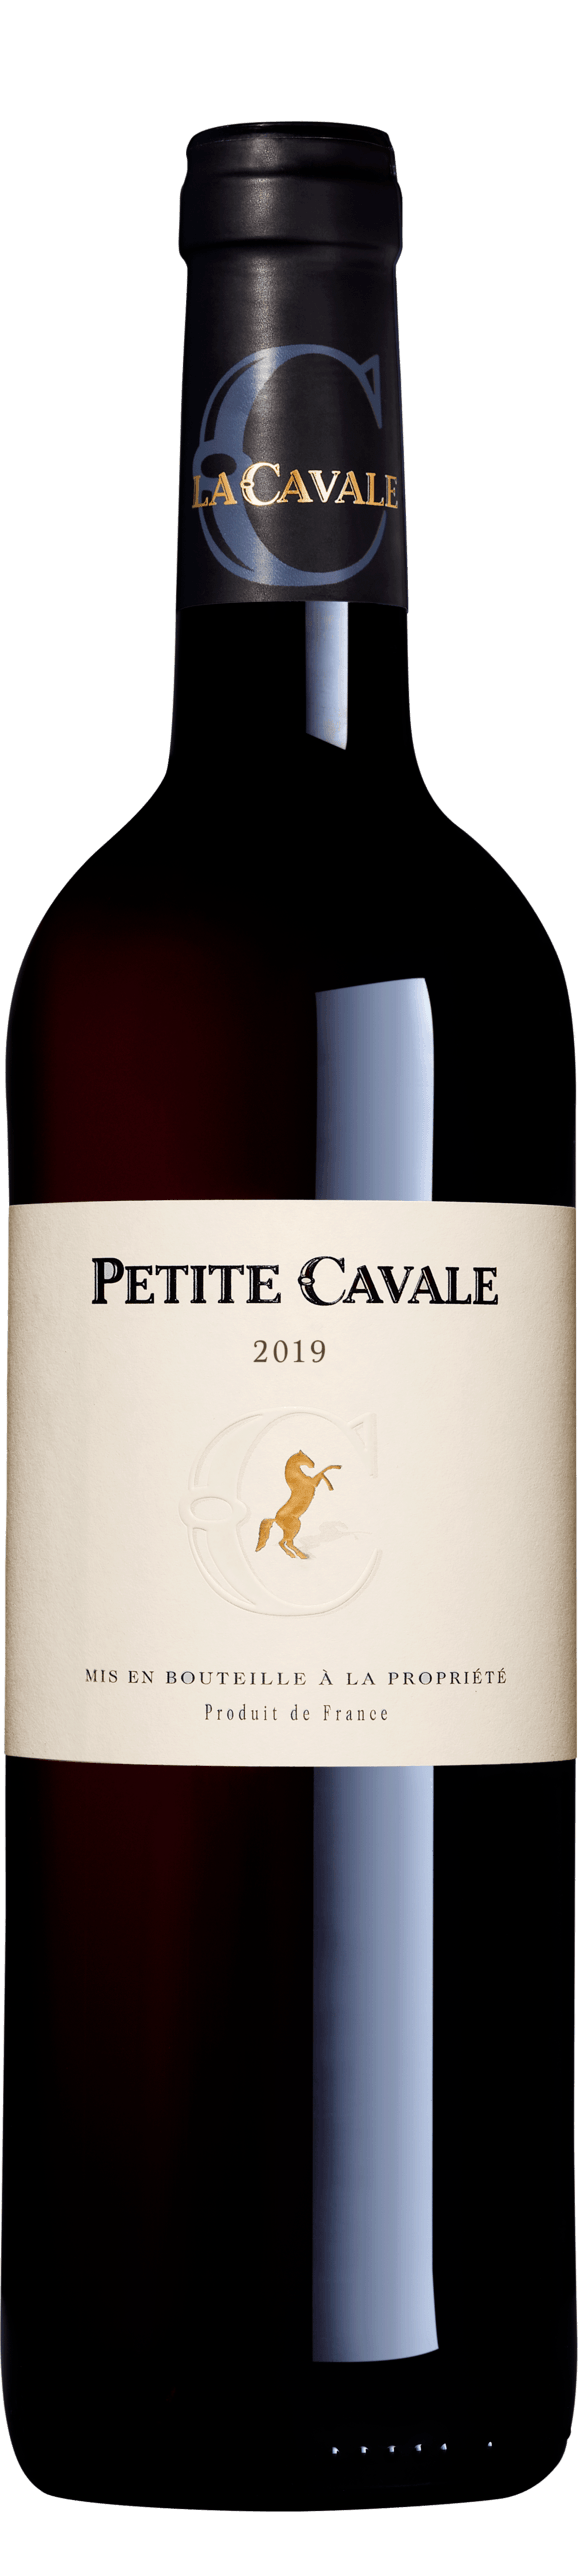 Petite Cavale rouge 2019 - Domaine La Cavale